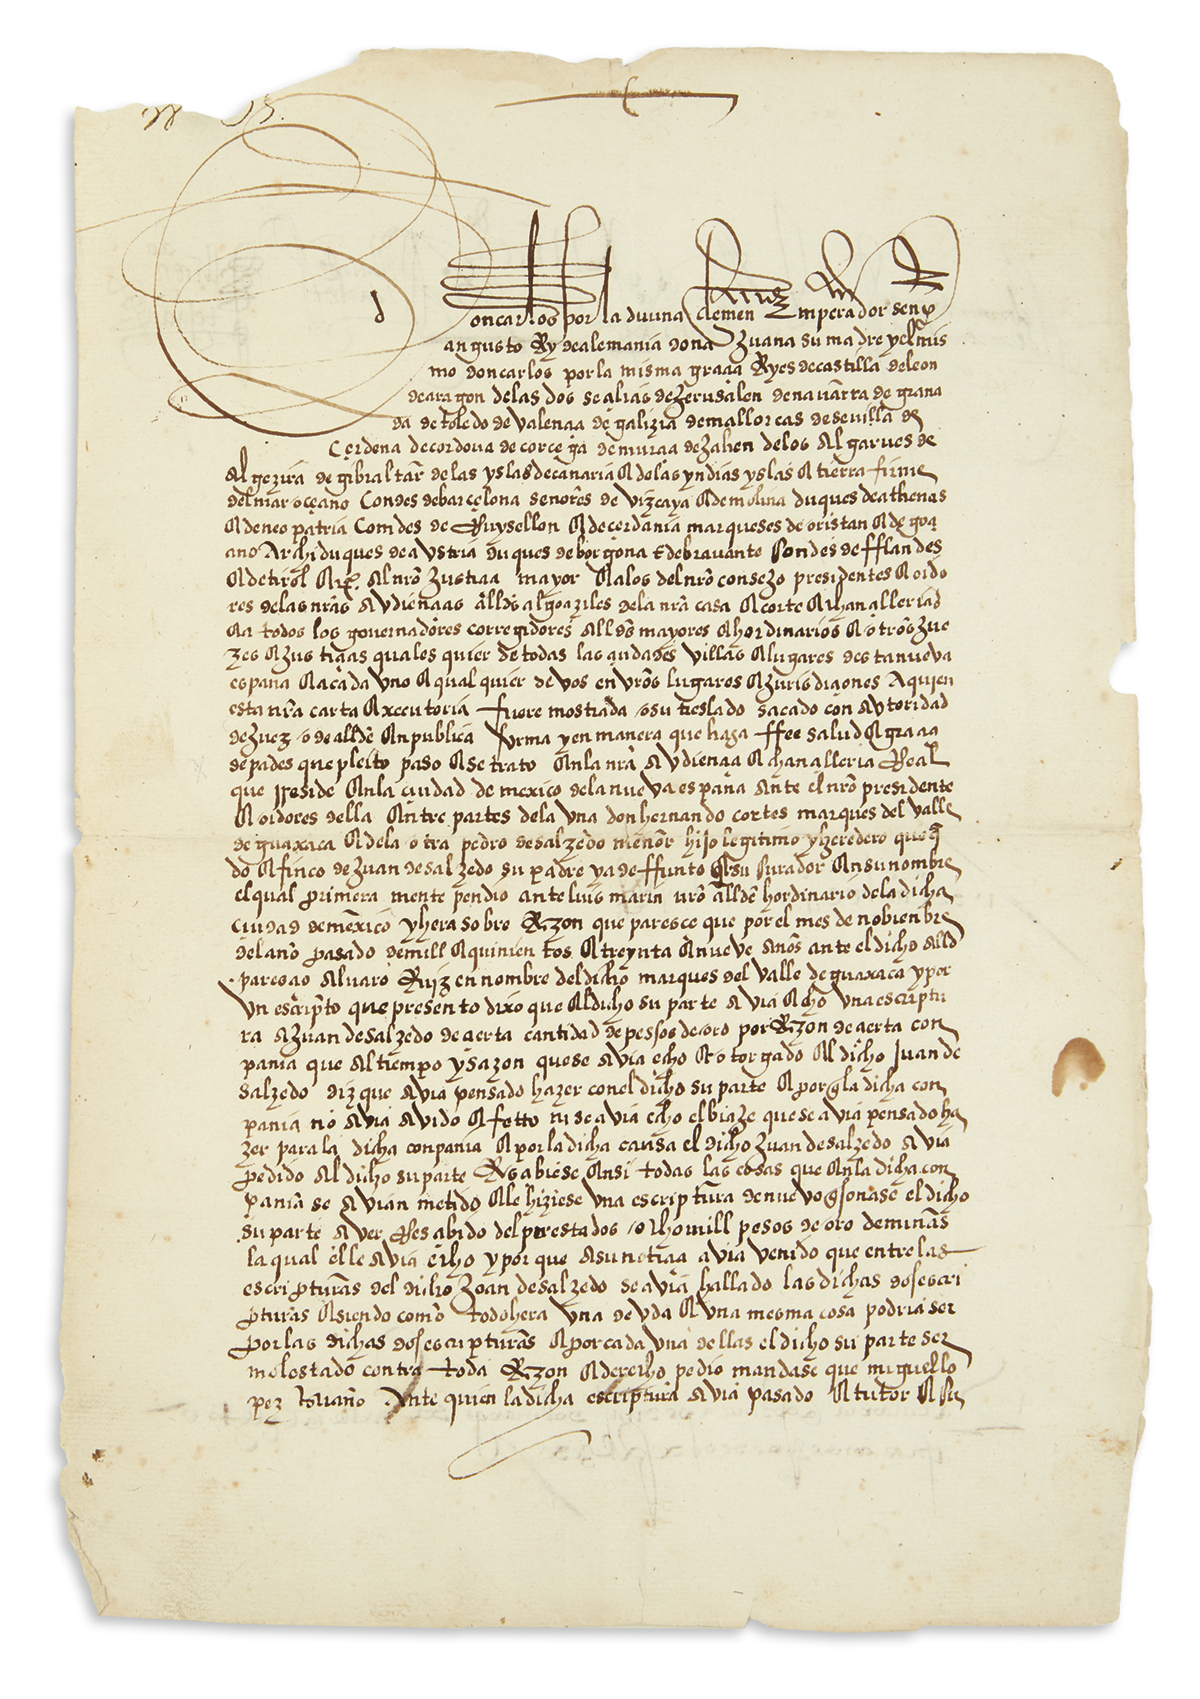 (MEXICAN MANUSCRIPTS.) Mendoza, Antonio de. Decree by the Viceroy of New Spain in a lawsuit against Hernán Cortés.